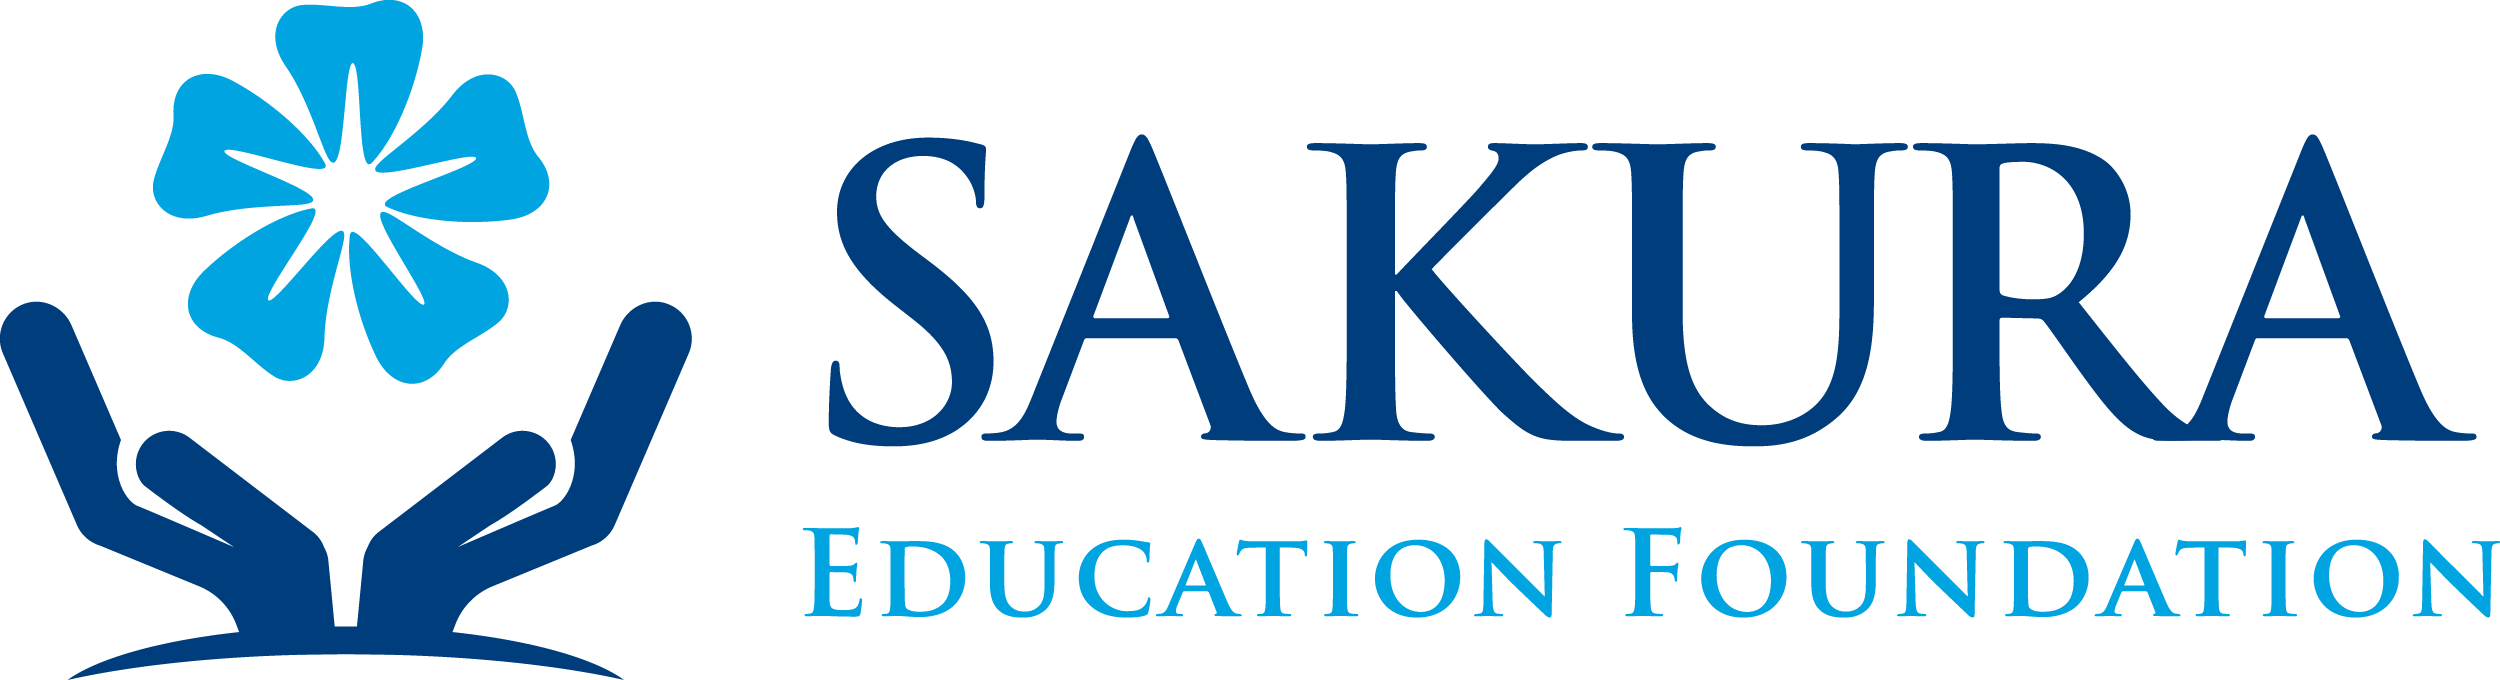 Sakura Education Foundation